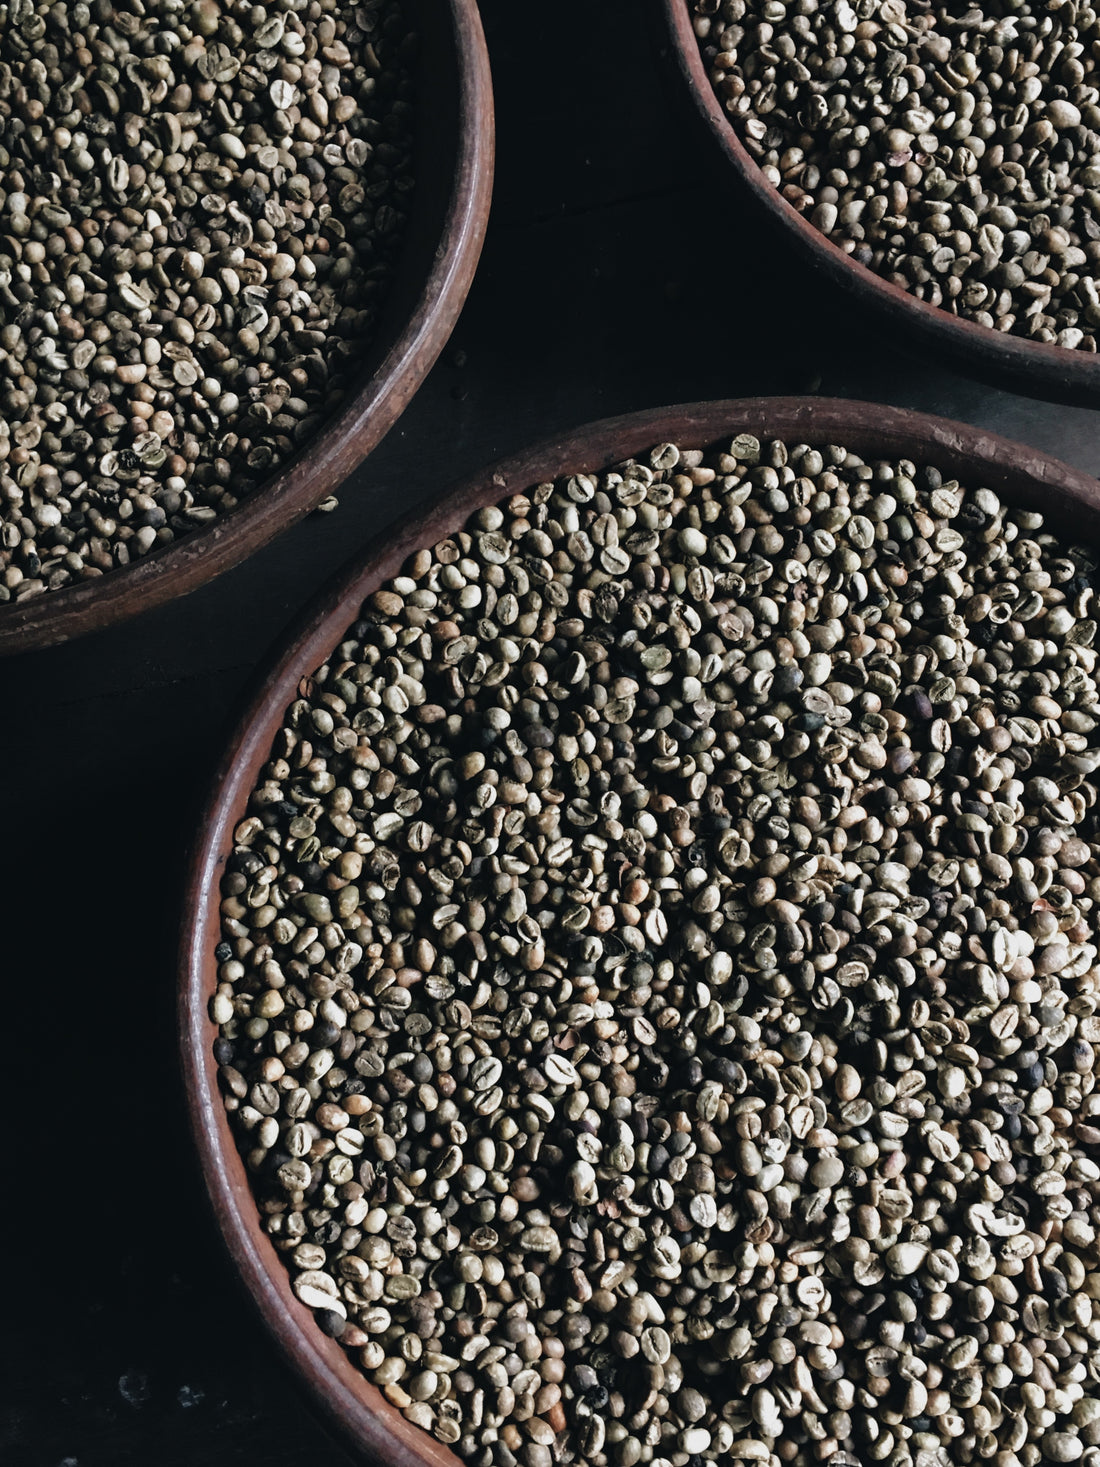 Exploring Coffee Bean Varieties: Meet the Fabulous Four